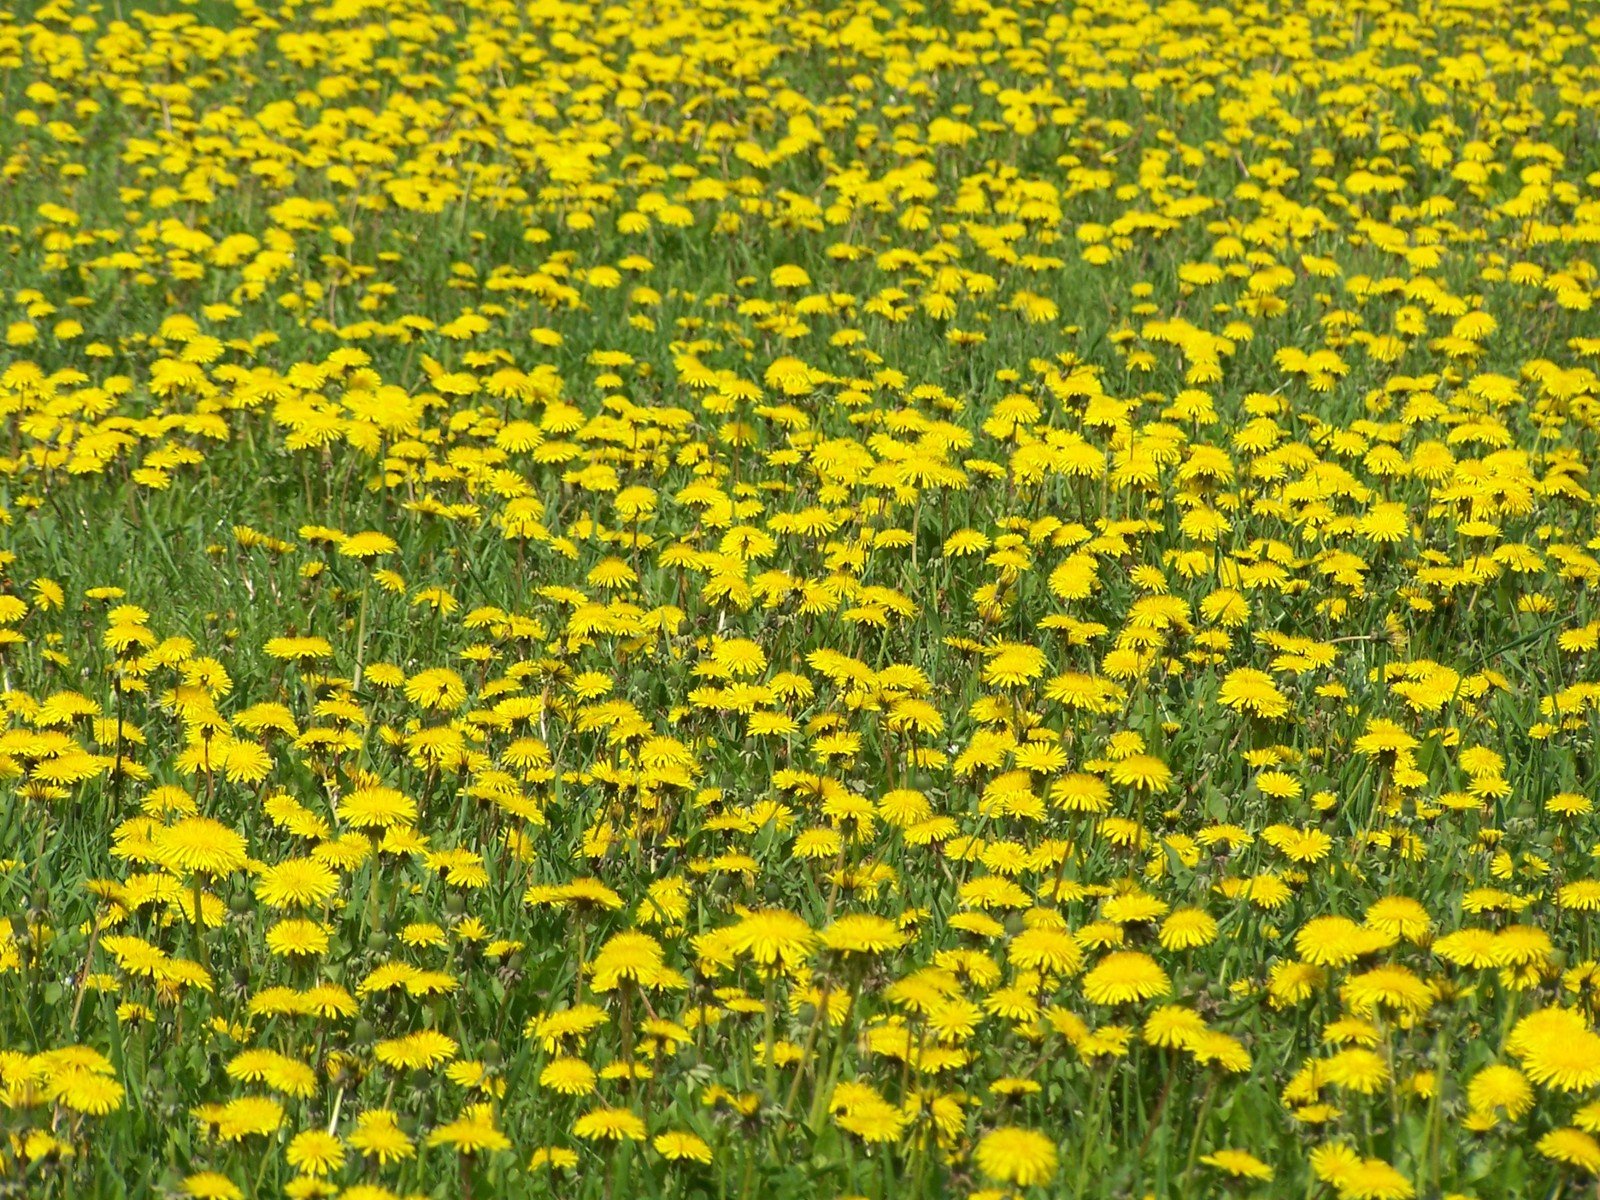 yellow dandelions are abundant in the field